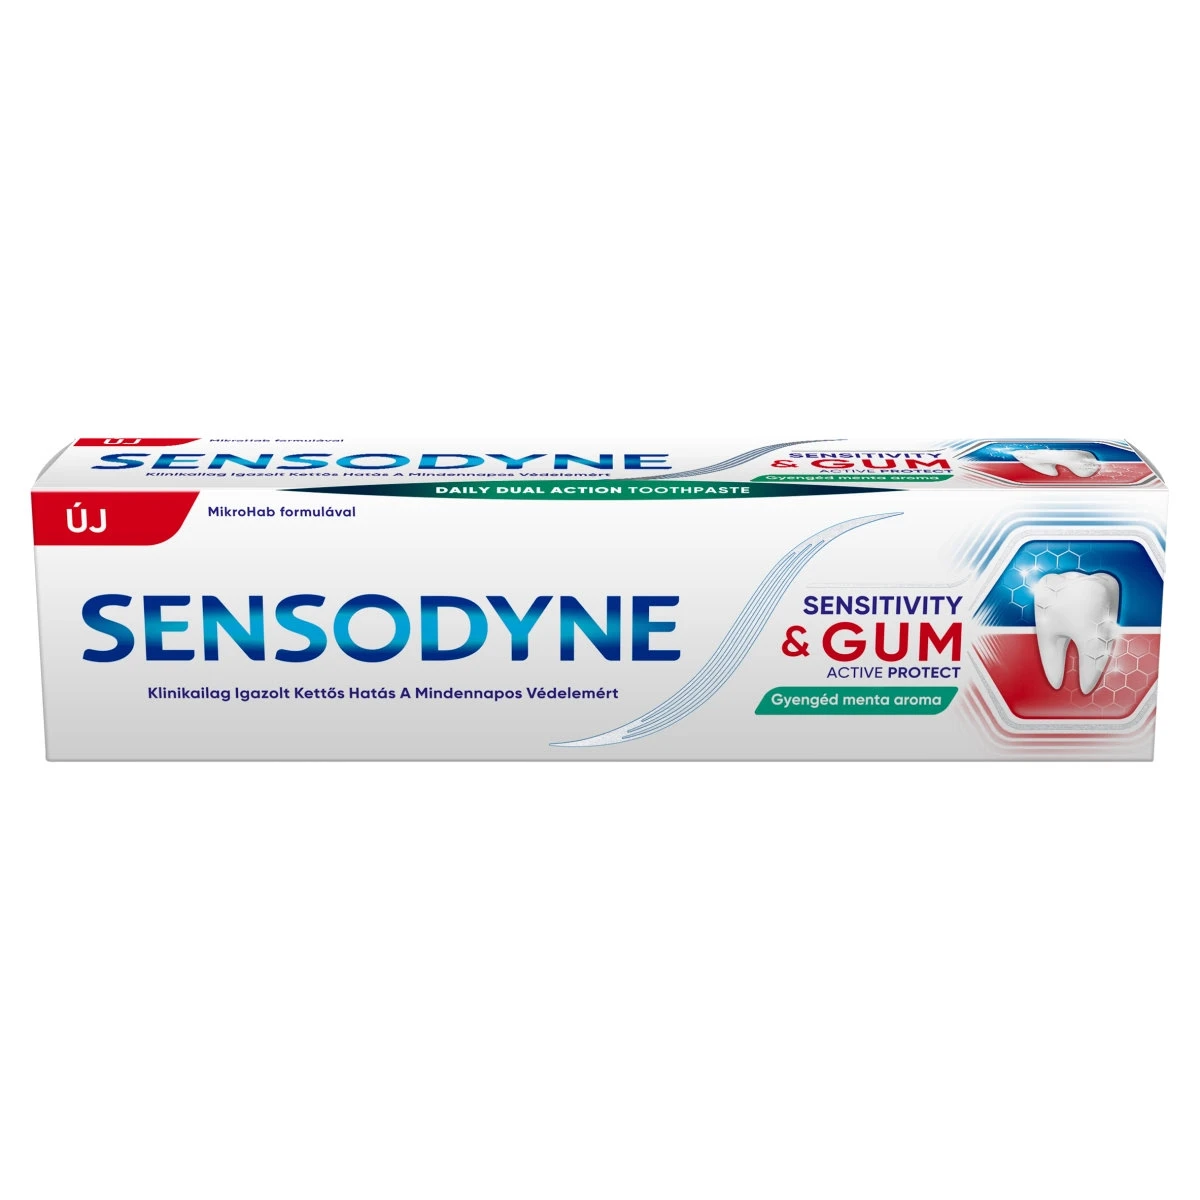 Sensodyne Sensitivity & Gum fogkrém 75 ml